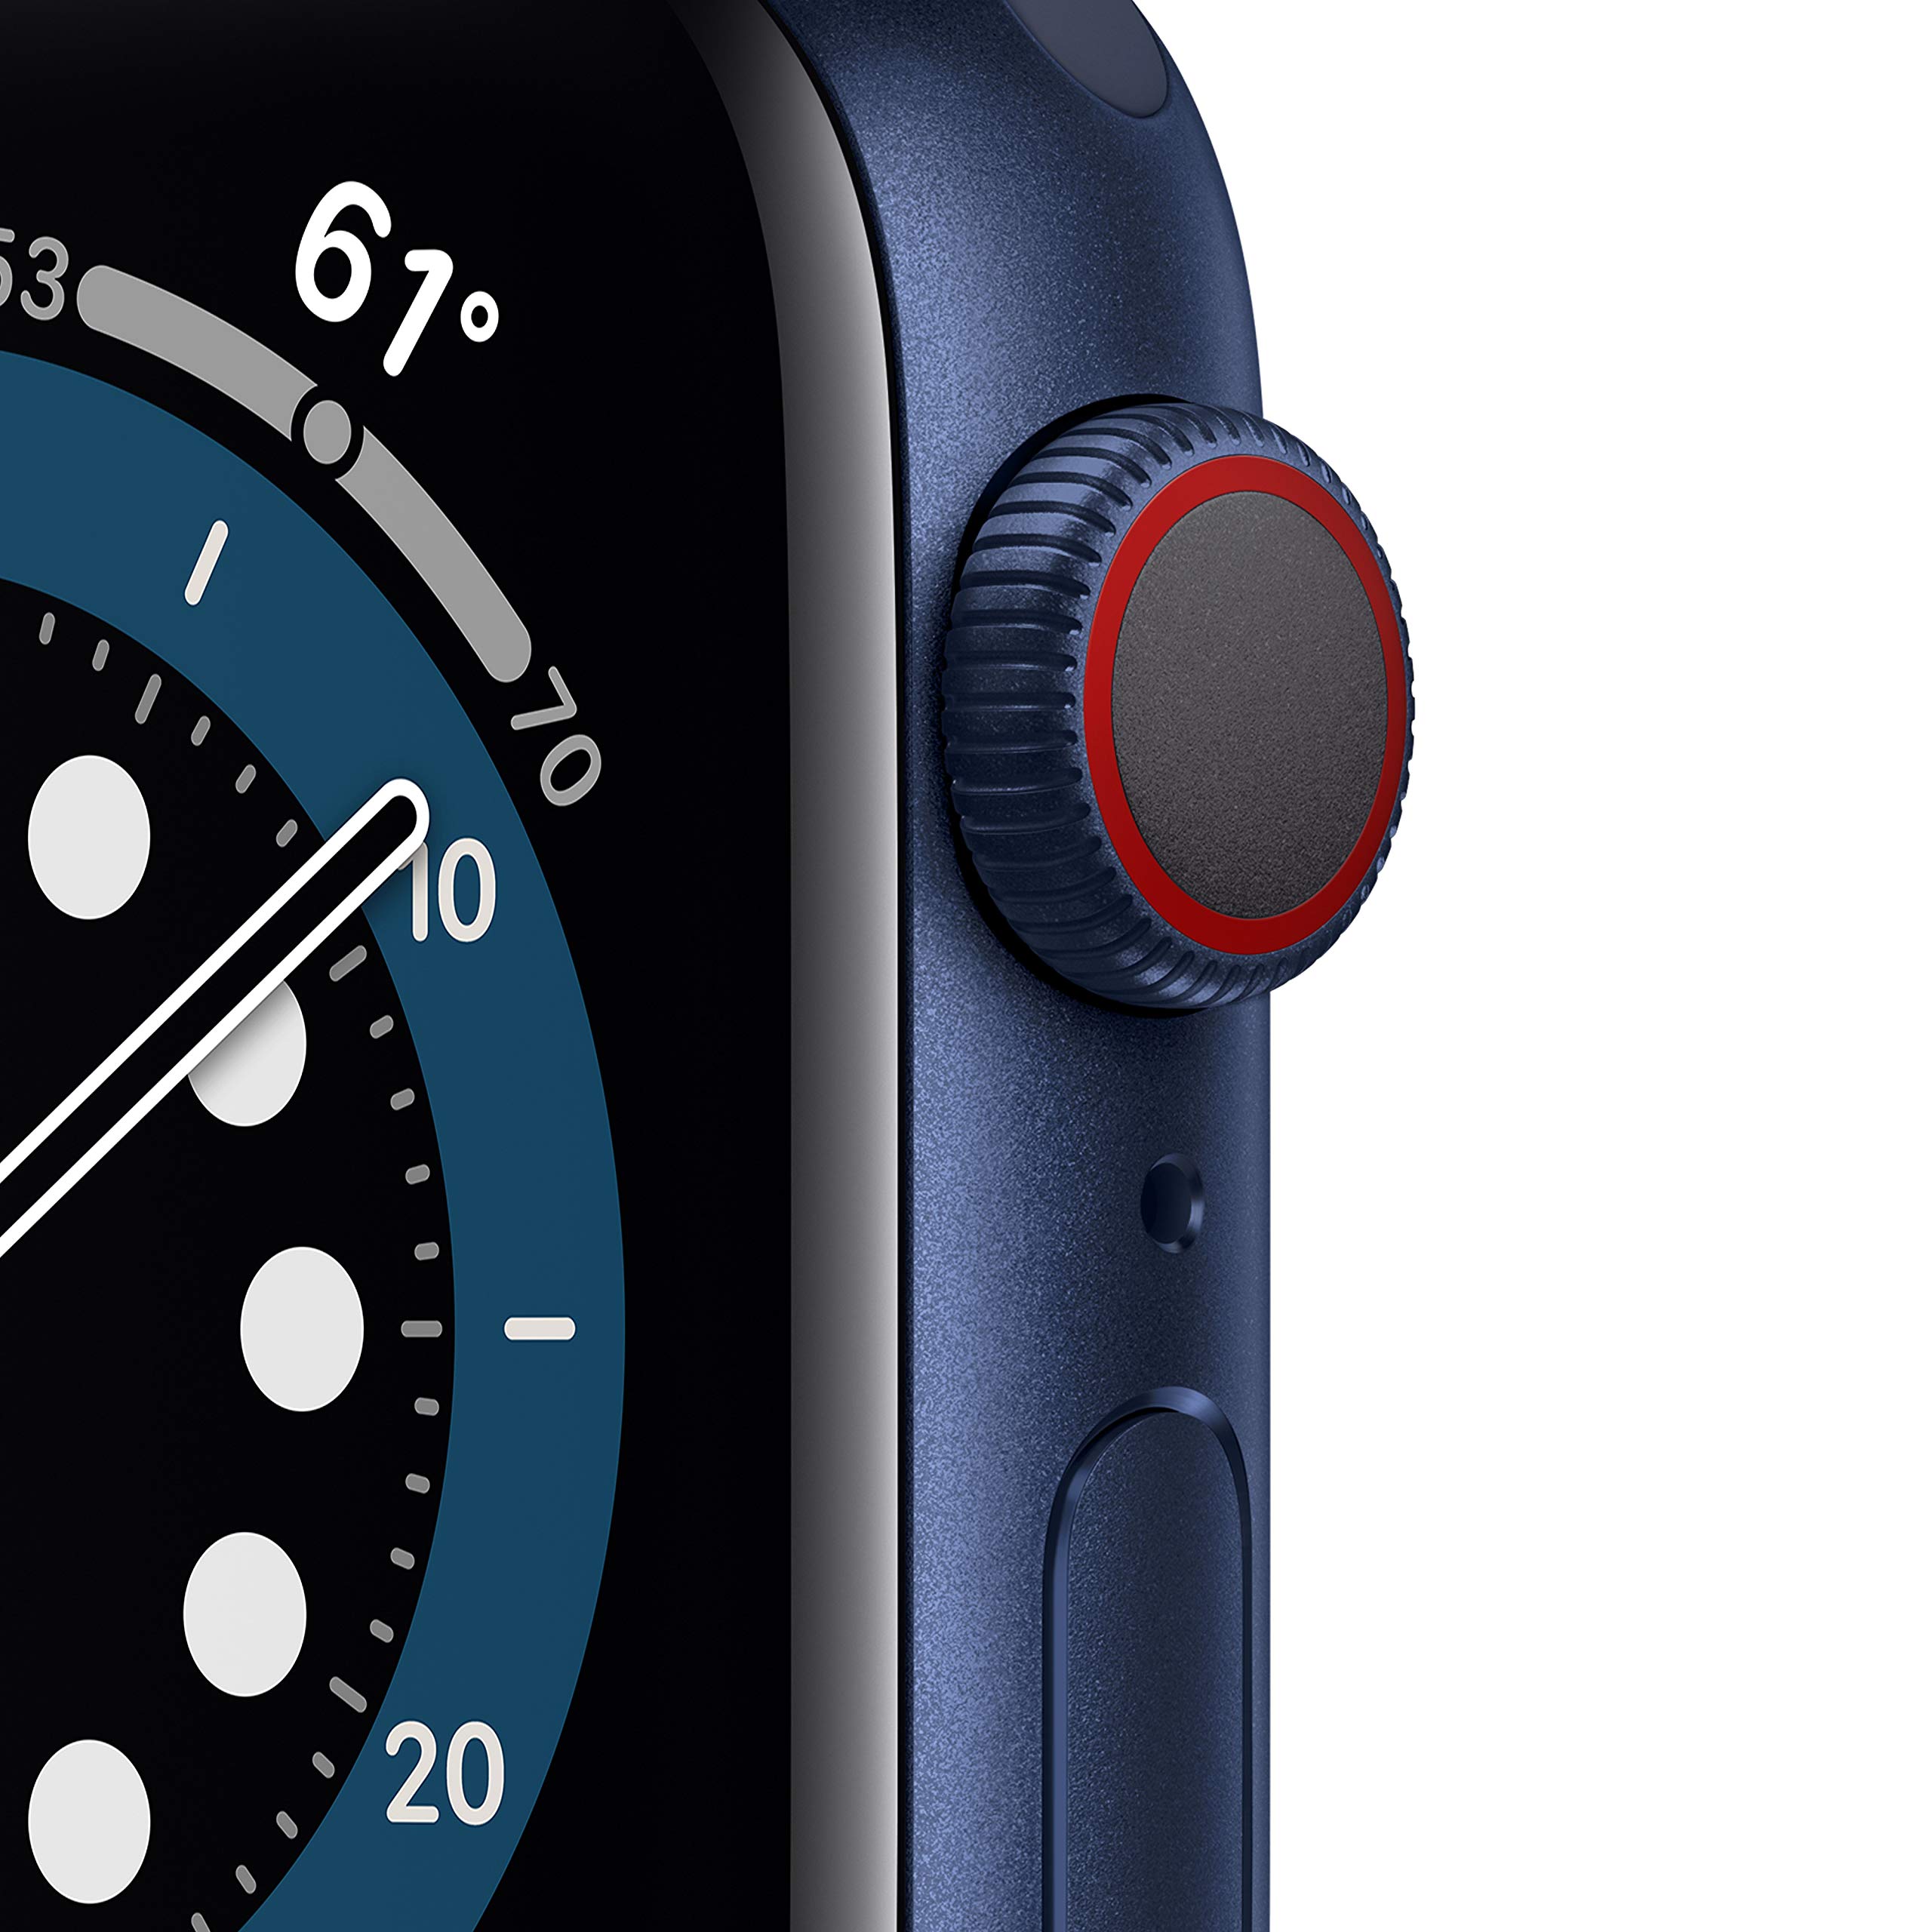 Apple Watch Series 6 (GPS + Cellular, 40mm) - Blue Aluminum Case with Deep Navy Sport Band